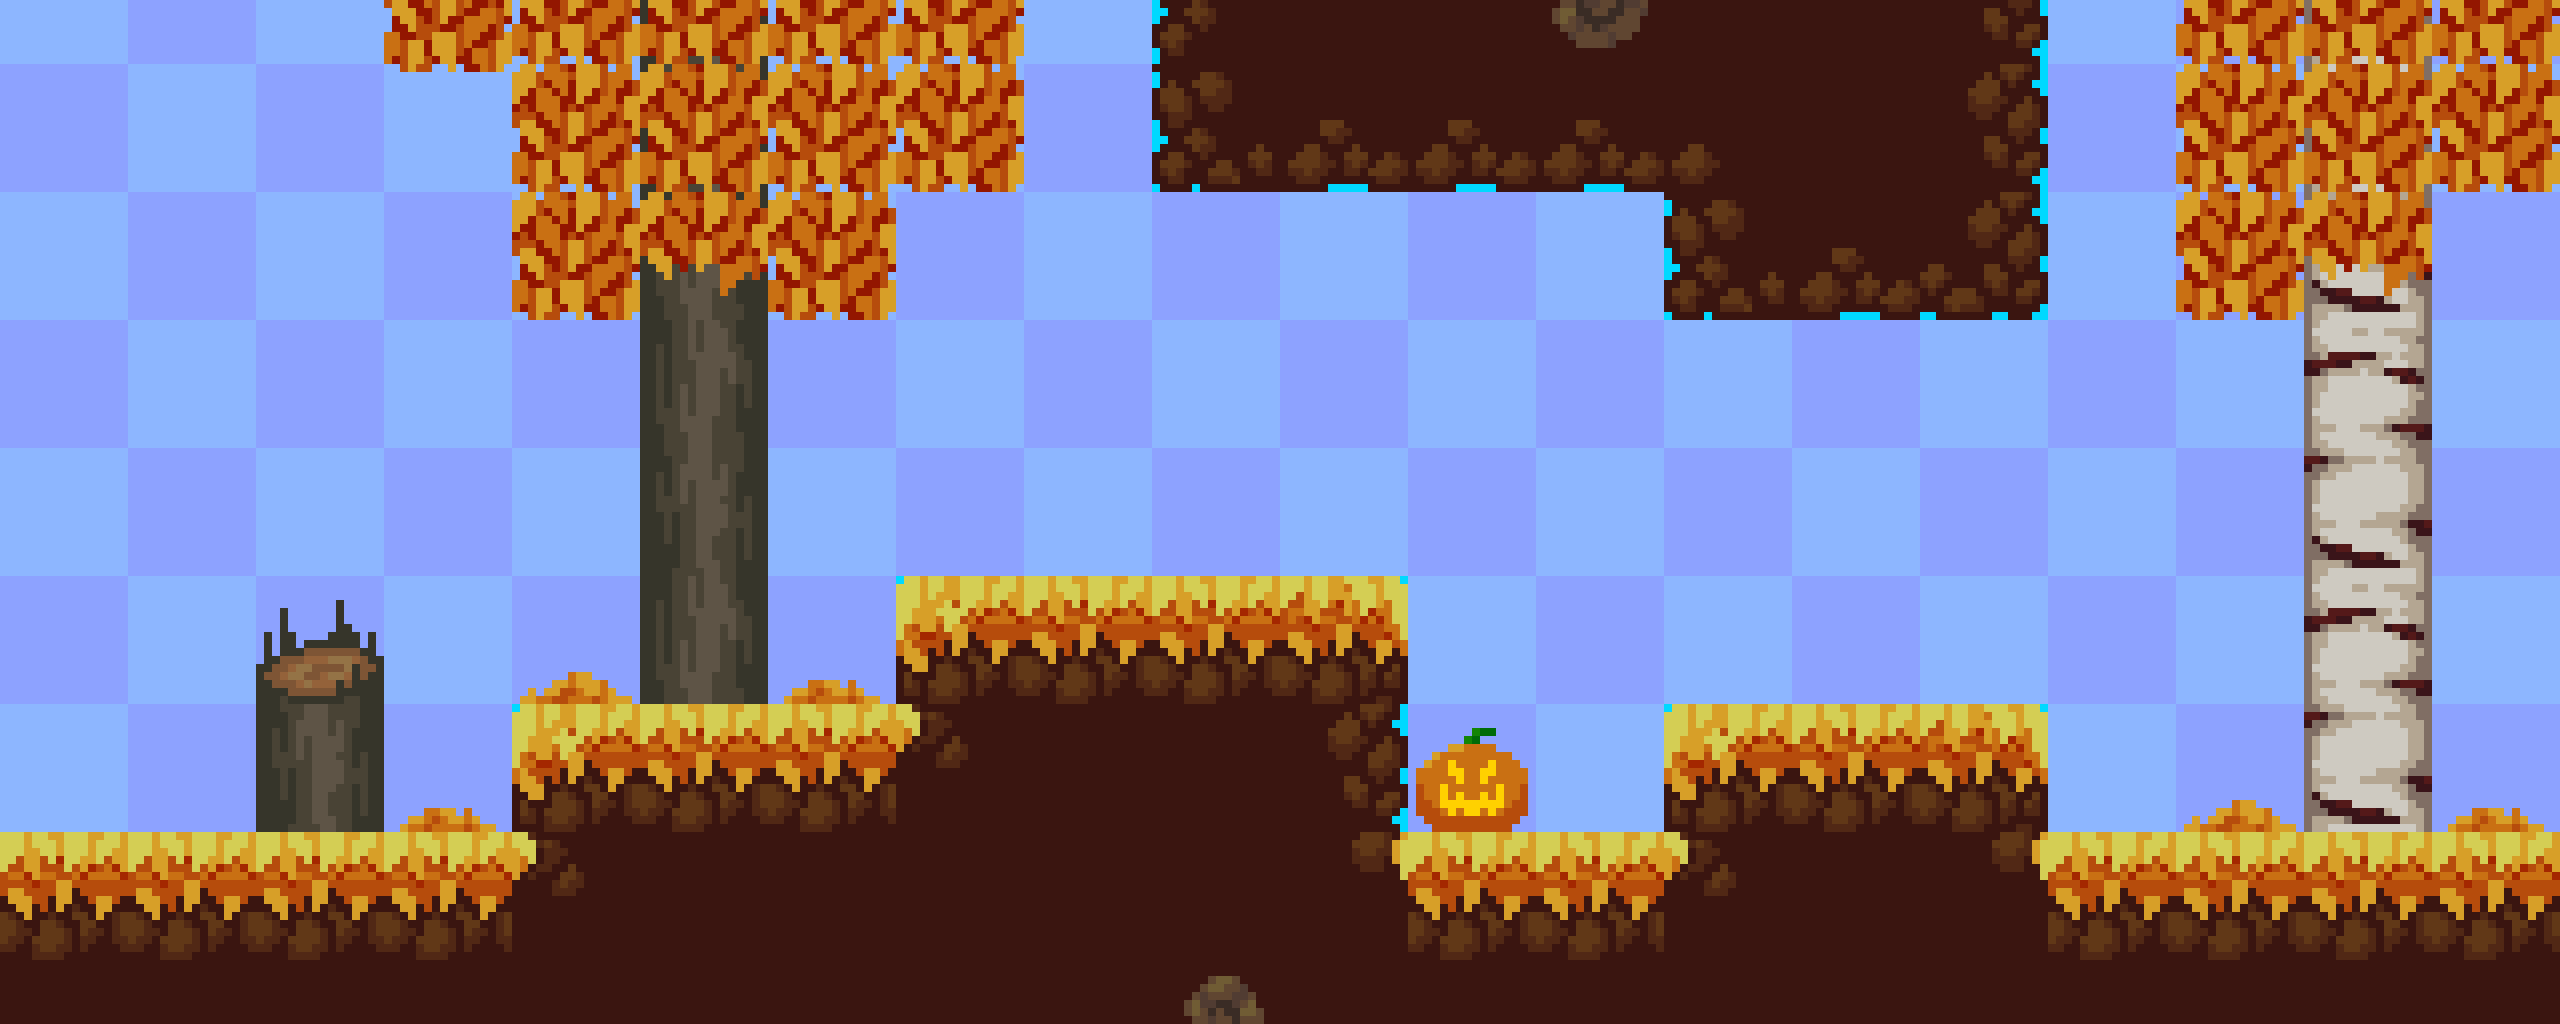 Free Autumn Tileset For Pixelart Games